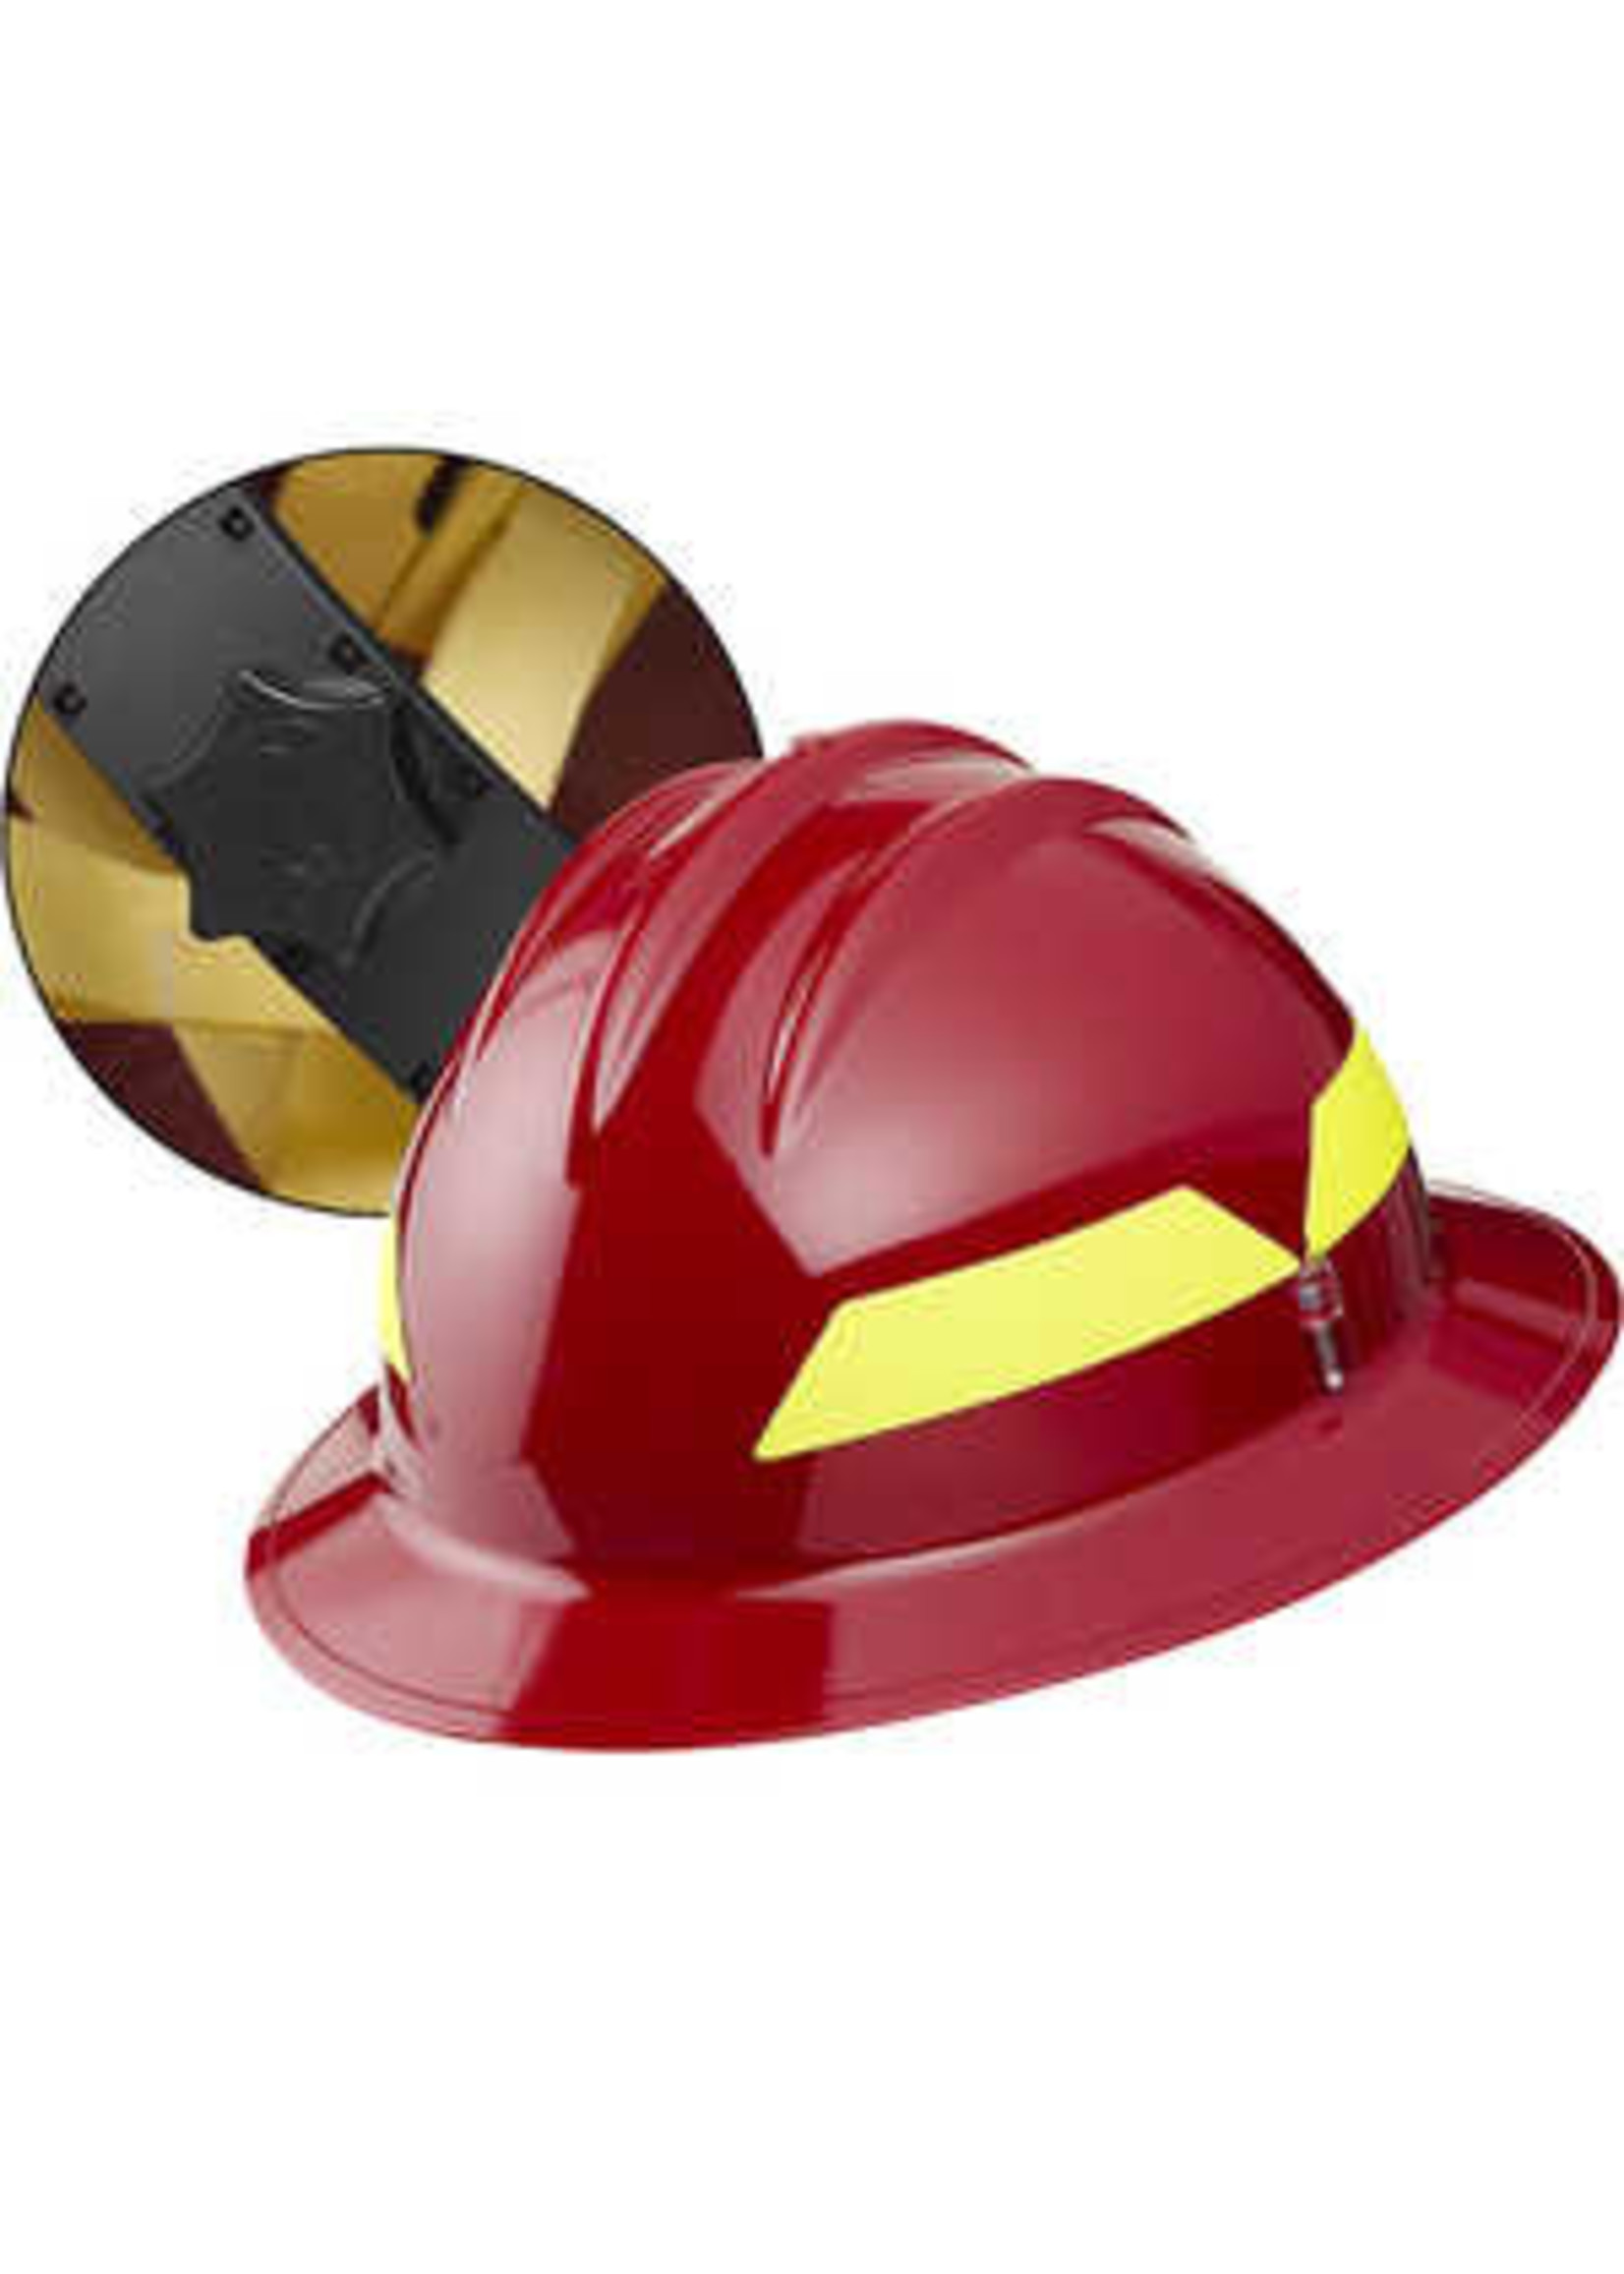 Wildland Helmet, Red